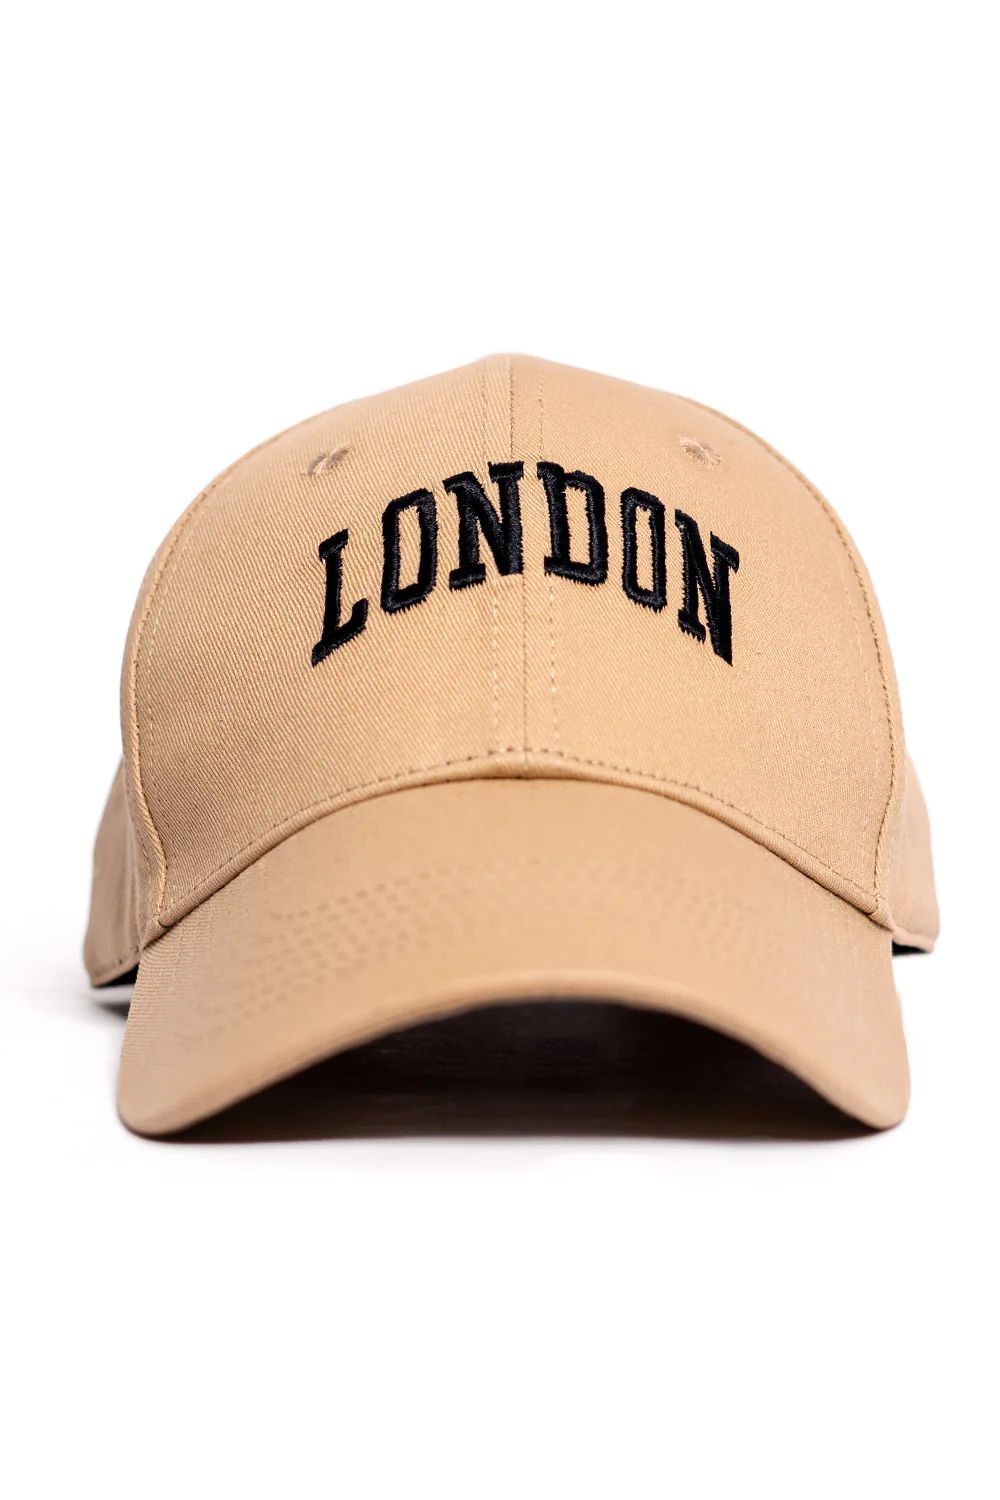 BALL CAP - London | Los Angeles Trading Co